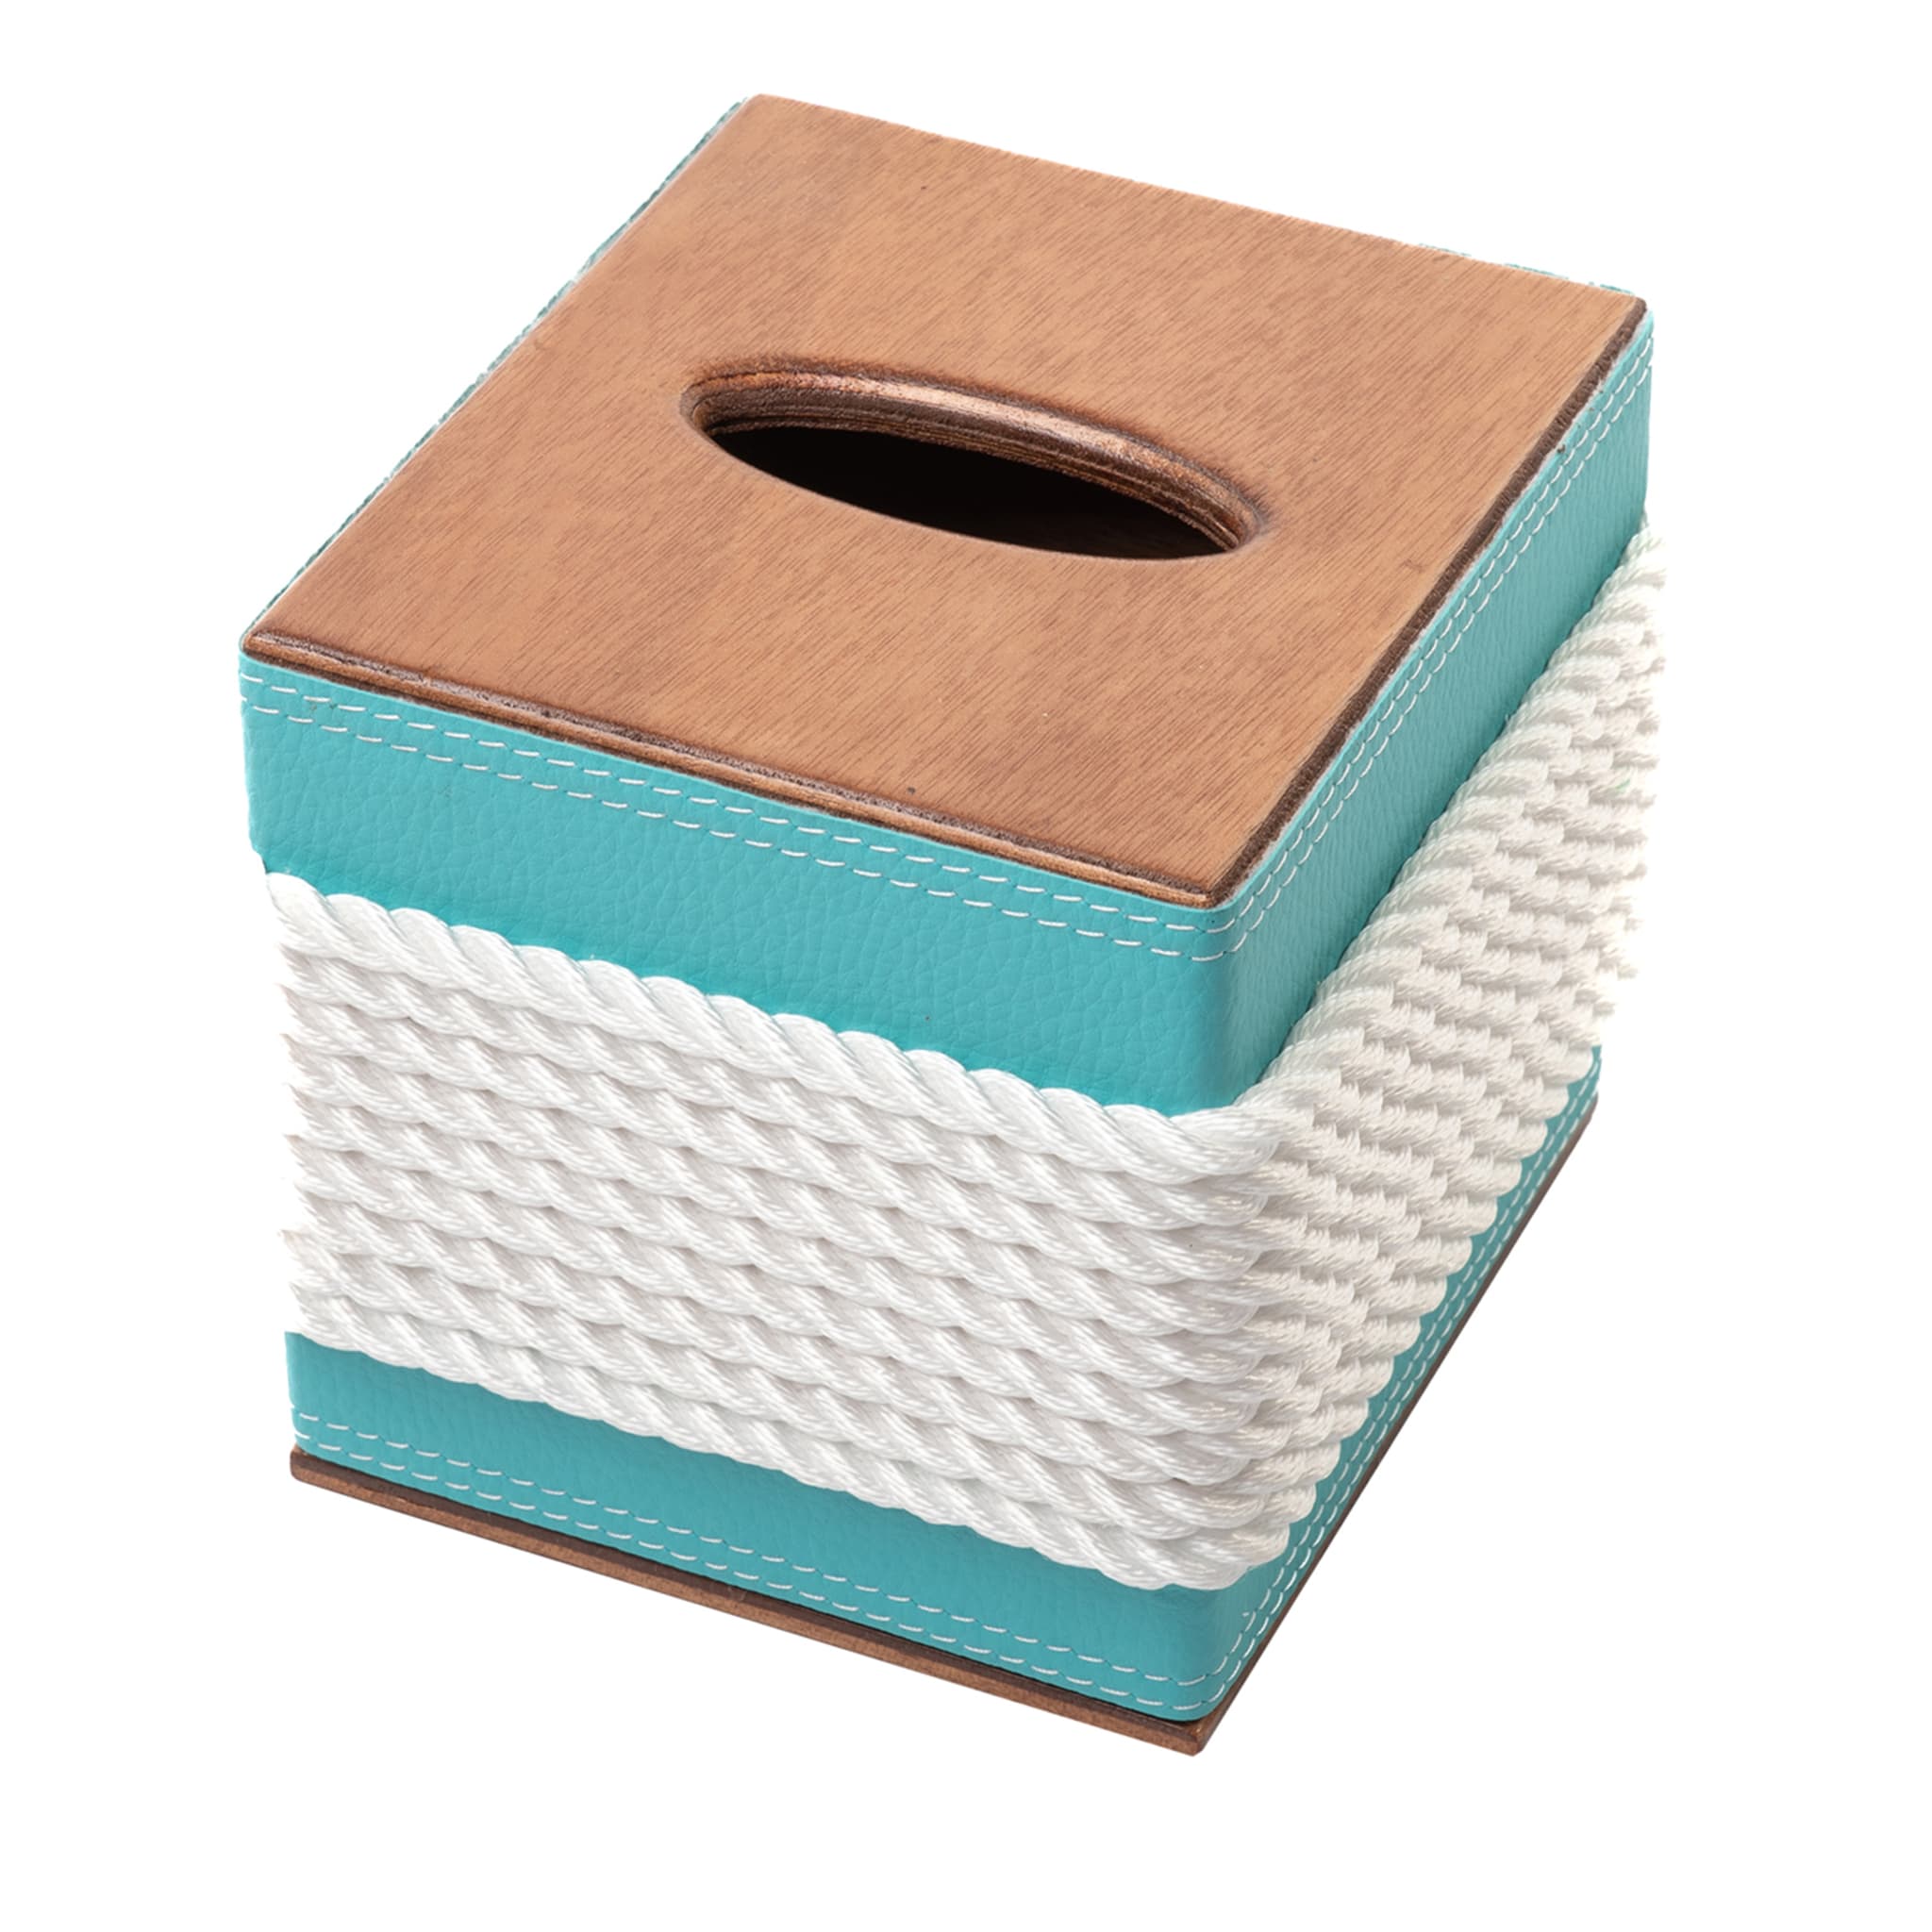 Square-Cut Turquoise & White Tissues Dispenser - Main view